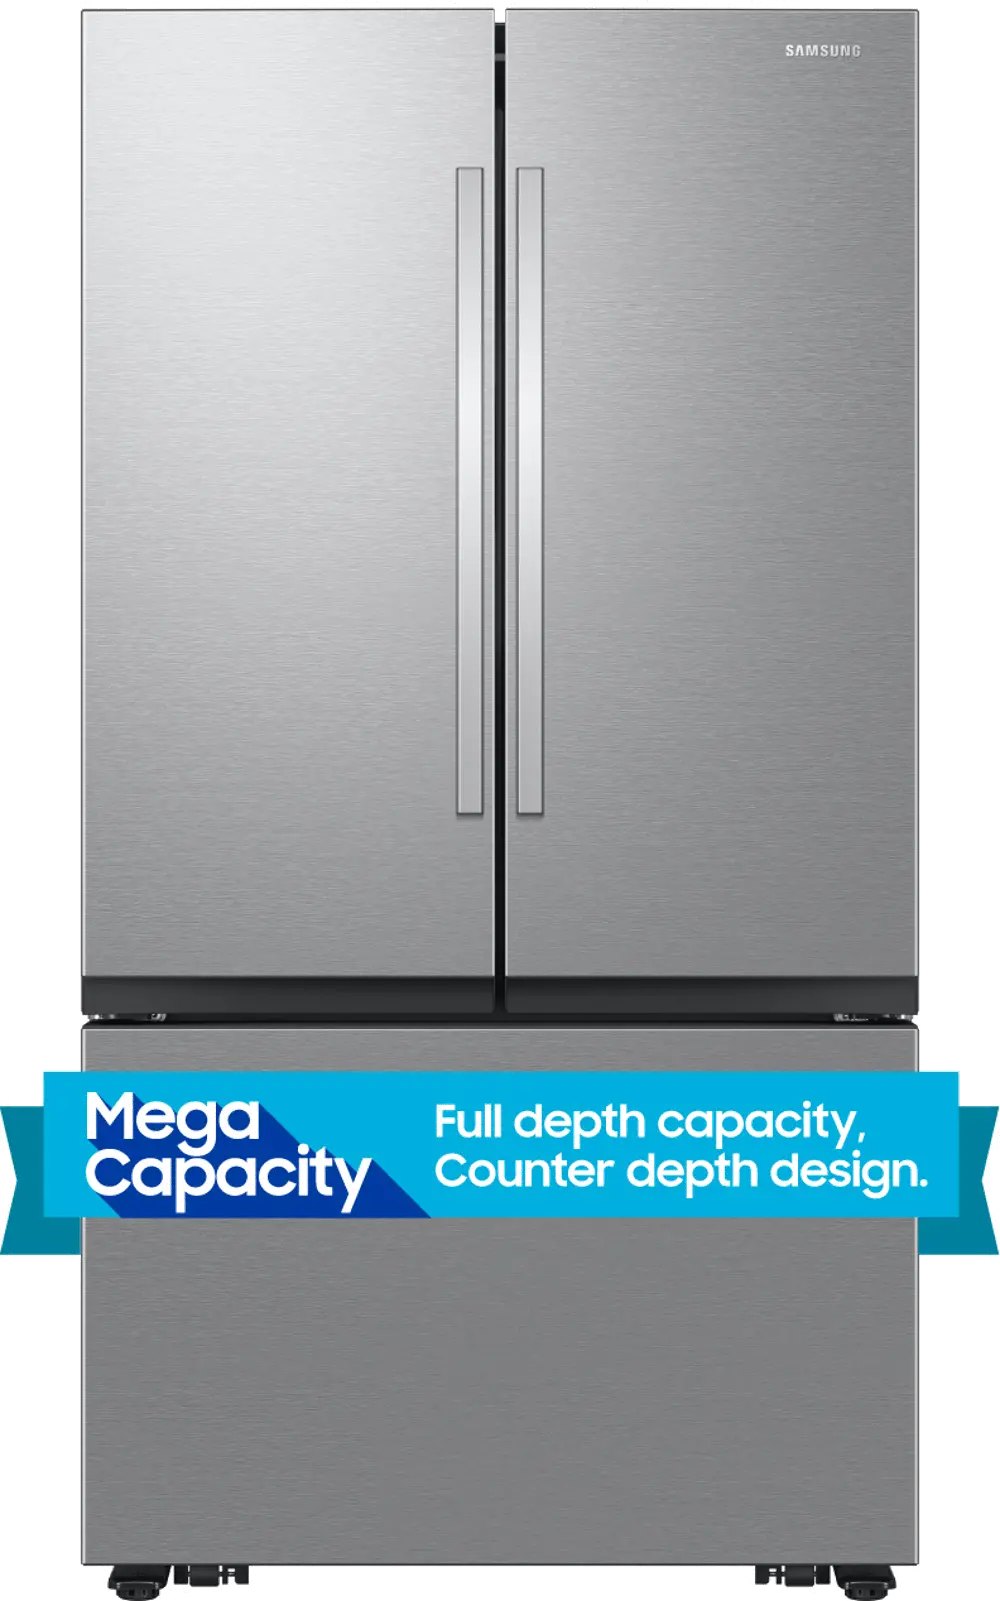 RF27CG5100SR Samsung 26.5 Cu Ft French Door Refrigerator - Counter Depth Stainless Steel-1